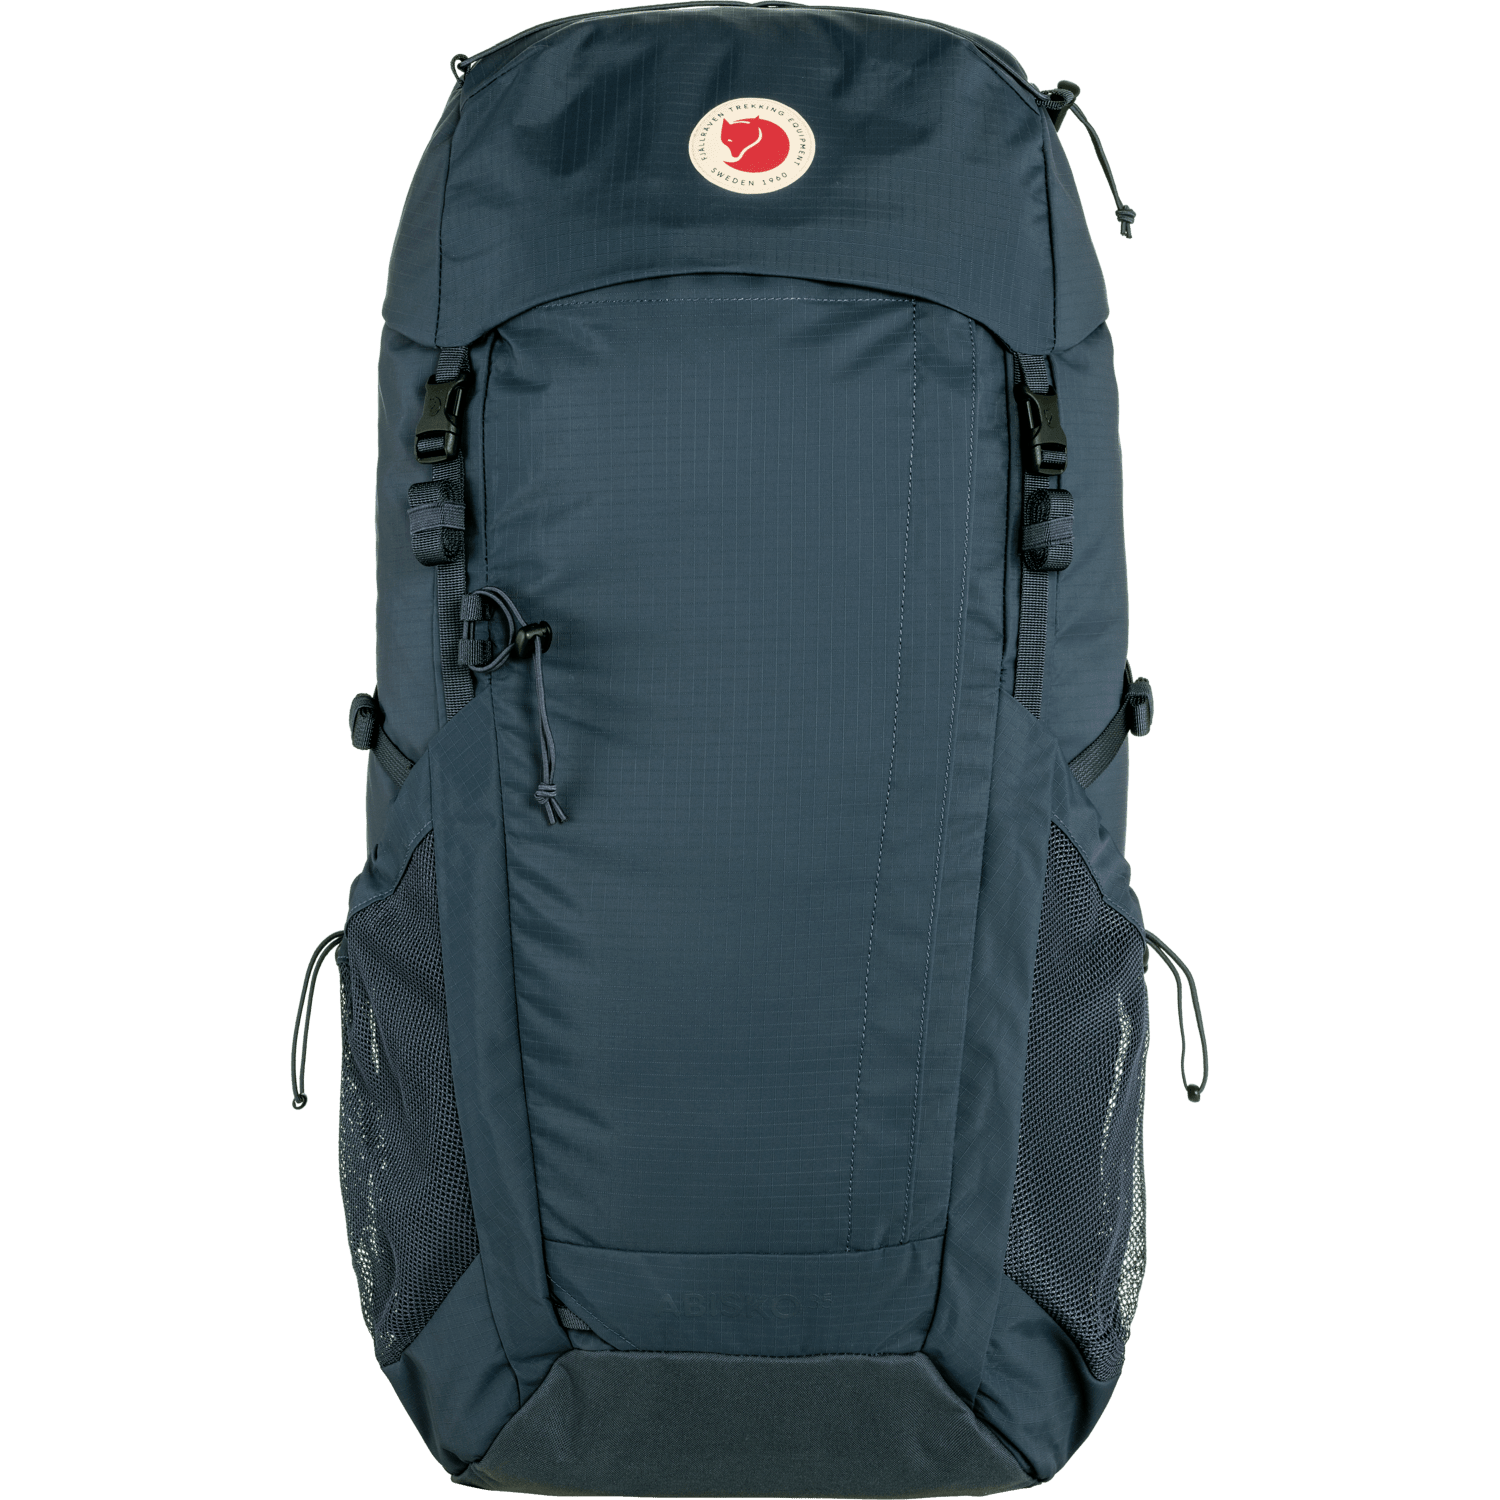 Fjällräven Abisko Hike 35 S/M - 100% Recycled Nylon Navy Bags